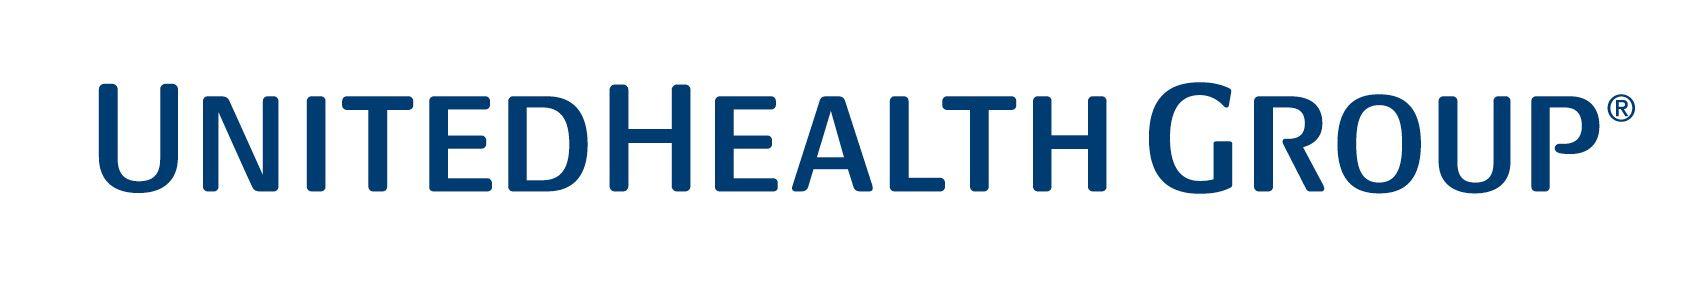 UnitedHealth Logo - Media Library - UnitedHealth Group